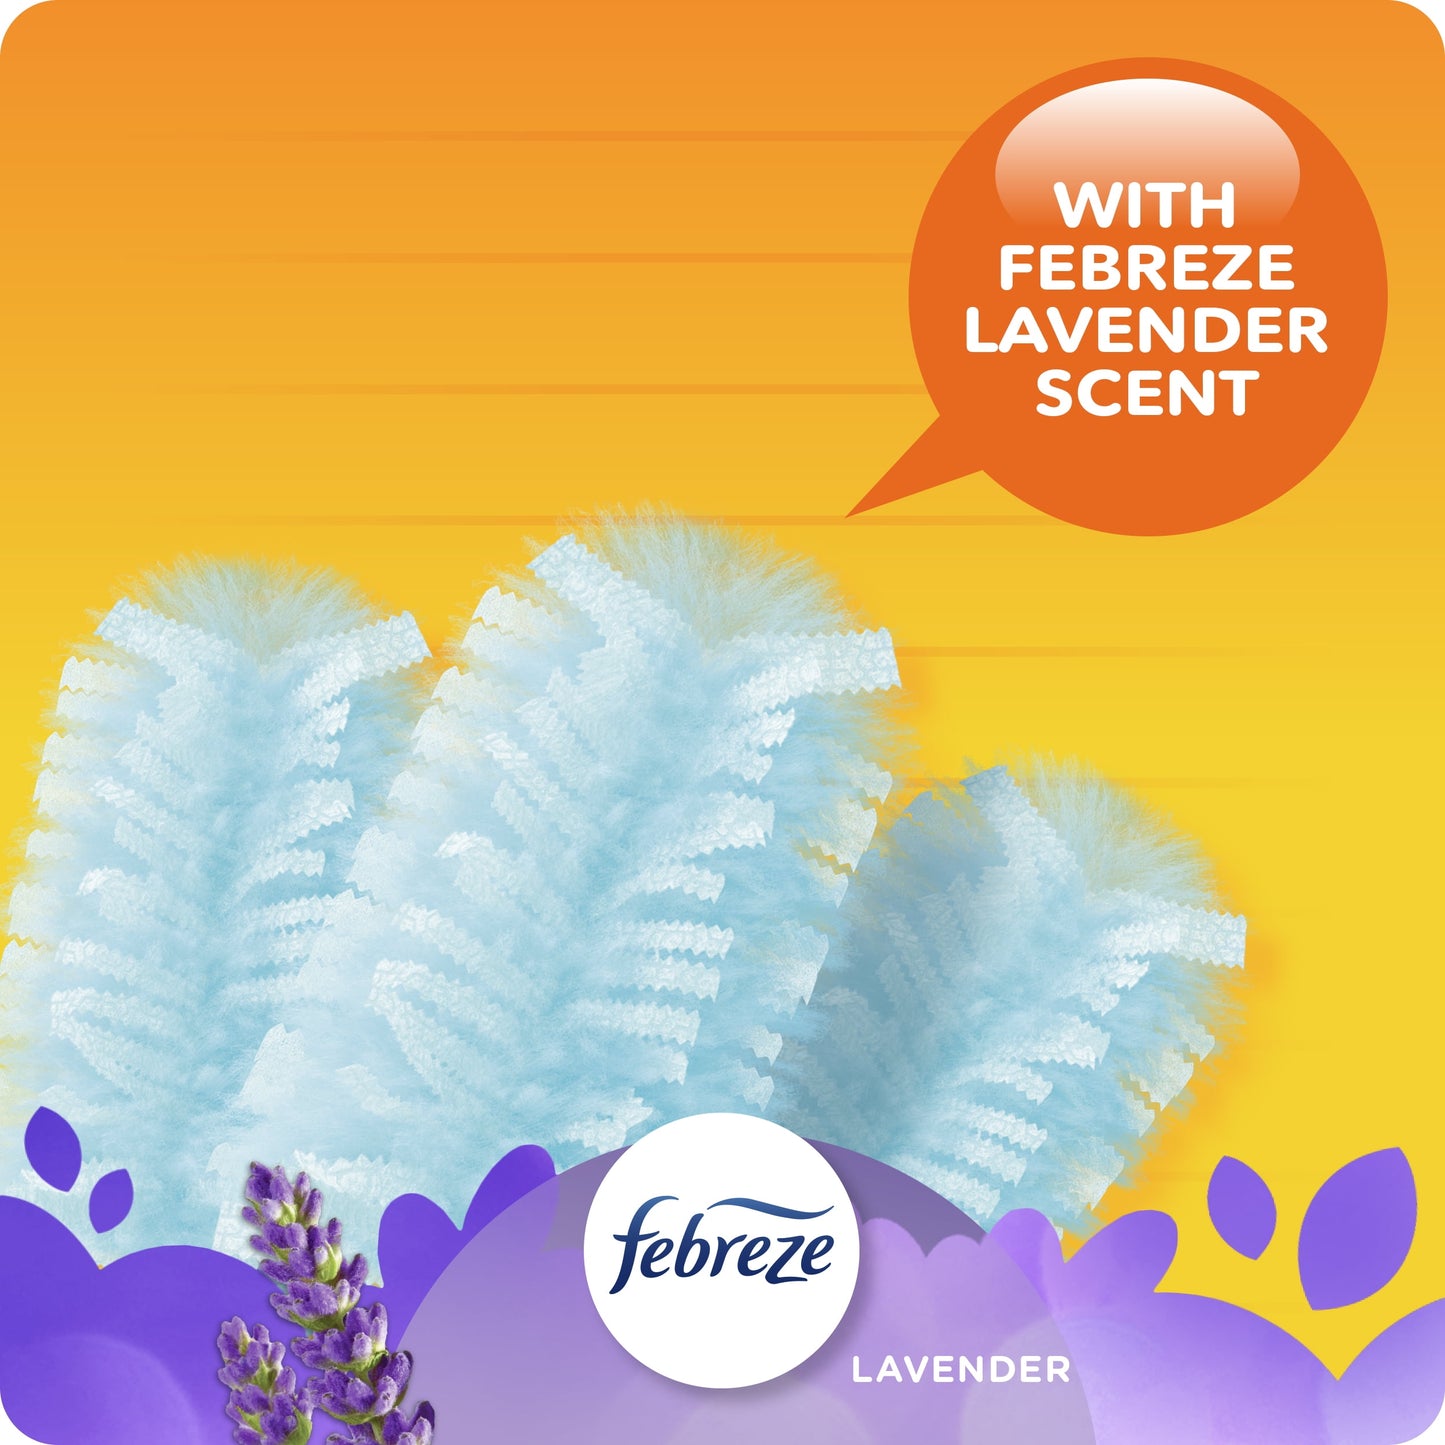 Swiffer Dusters, Lasting Freshness Febreze Lavender Scent,  Blue 10 Ct Refills